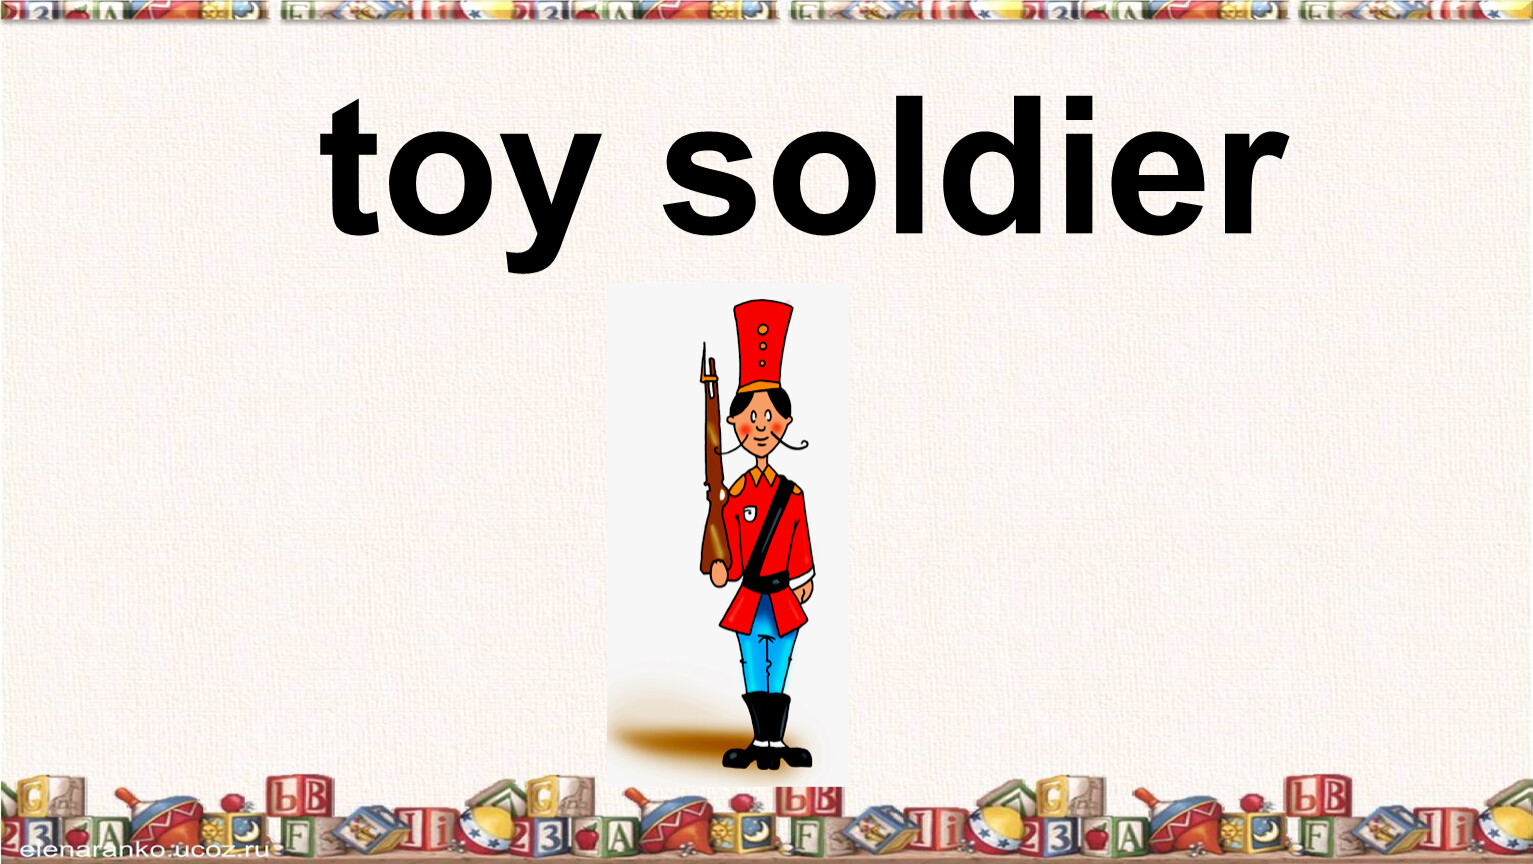 Where s the toy soldier. Toy Soldier перевод. Игрушечный солдатик спотлайт. Toy Soldier спотлайт. Игрушечный солдатик по английскому.